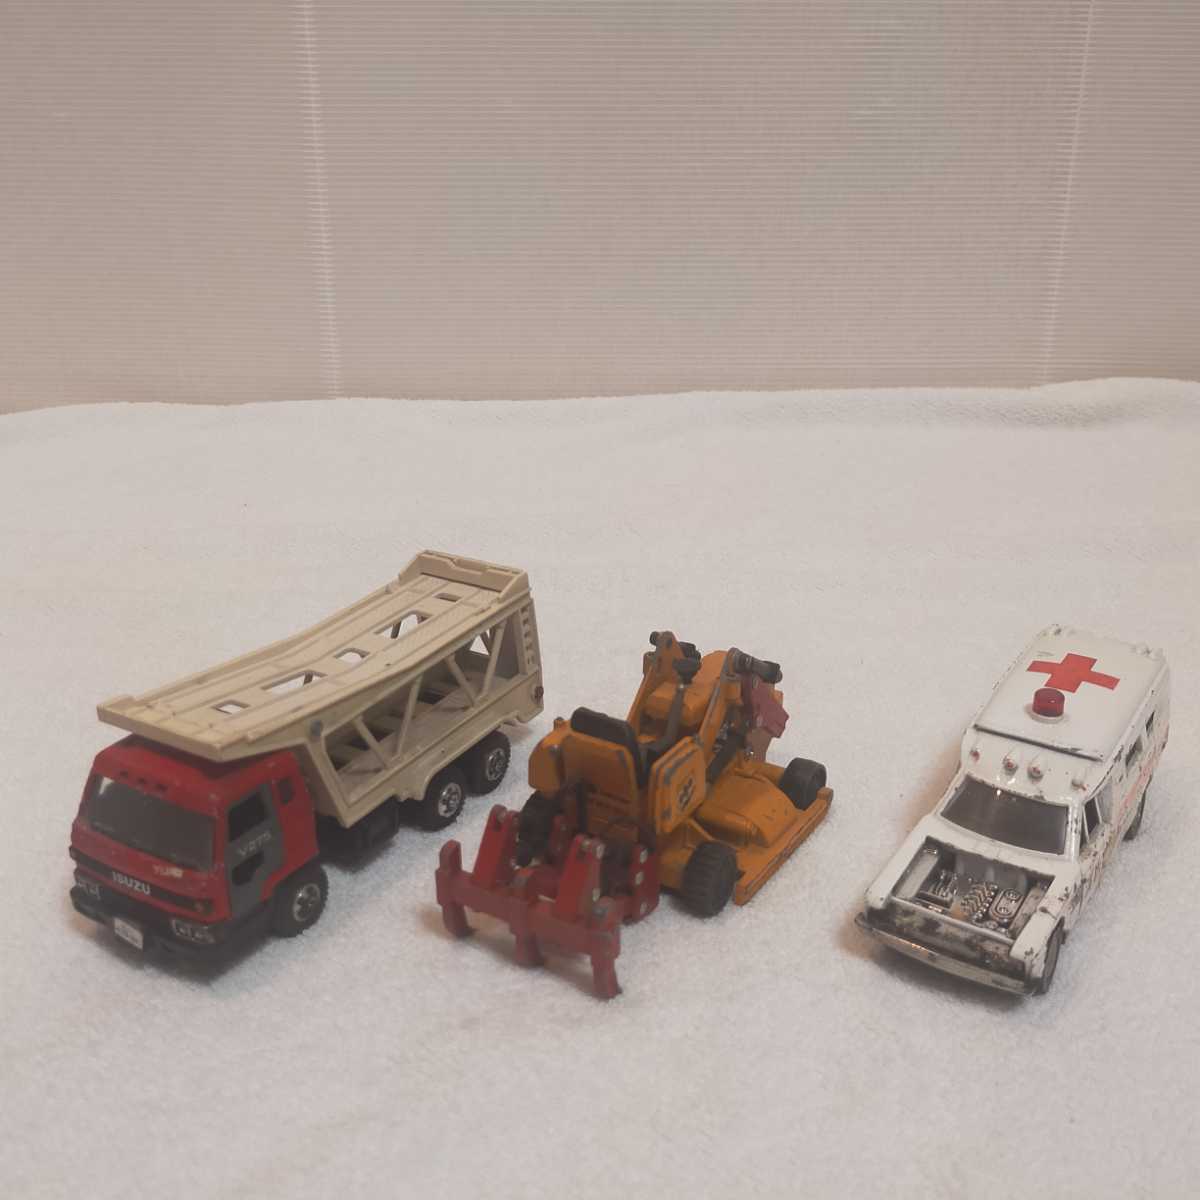 yonezawa toys ヨネザワトーイ DIAPET 3台 車両積載車 コマツ TOYOTA CROWM 救急車 破損、欠品あり ジャンク品_画像1